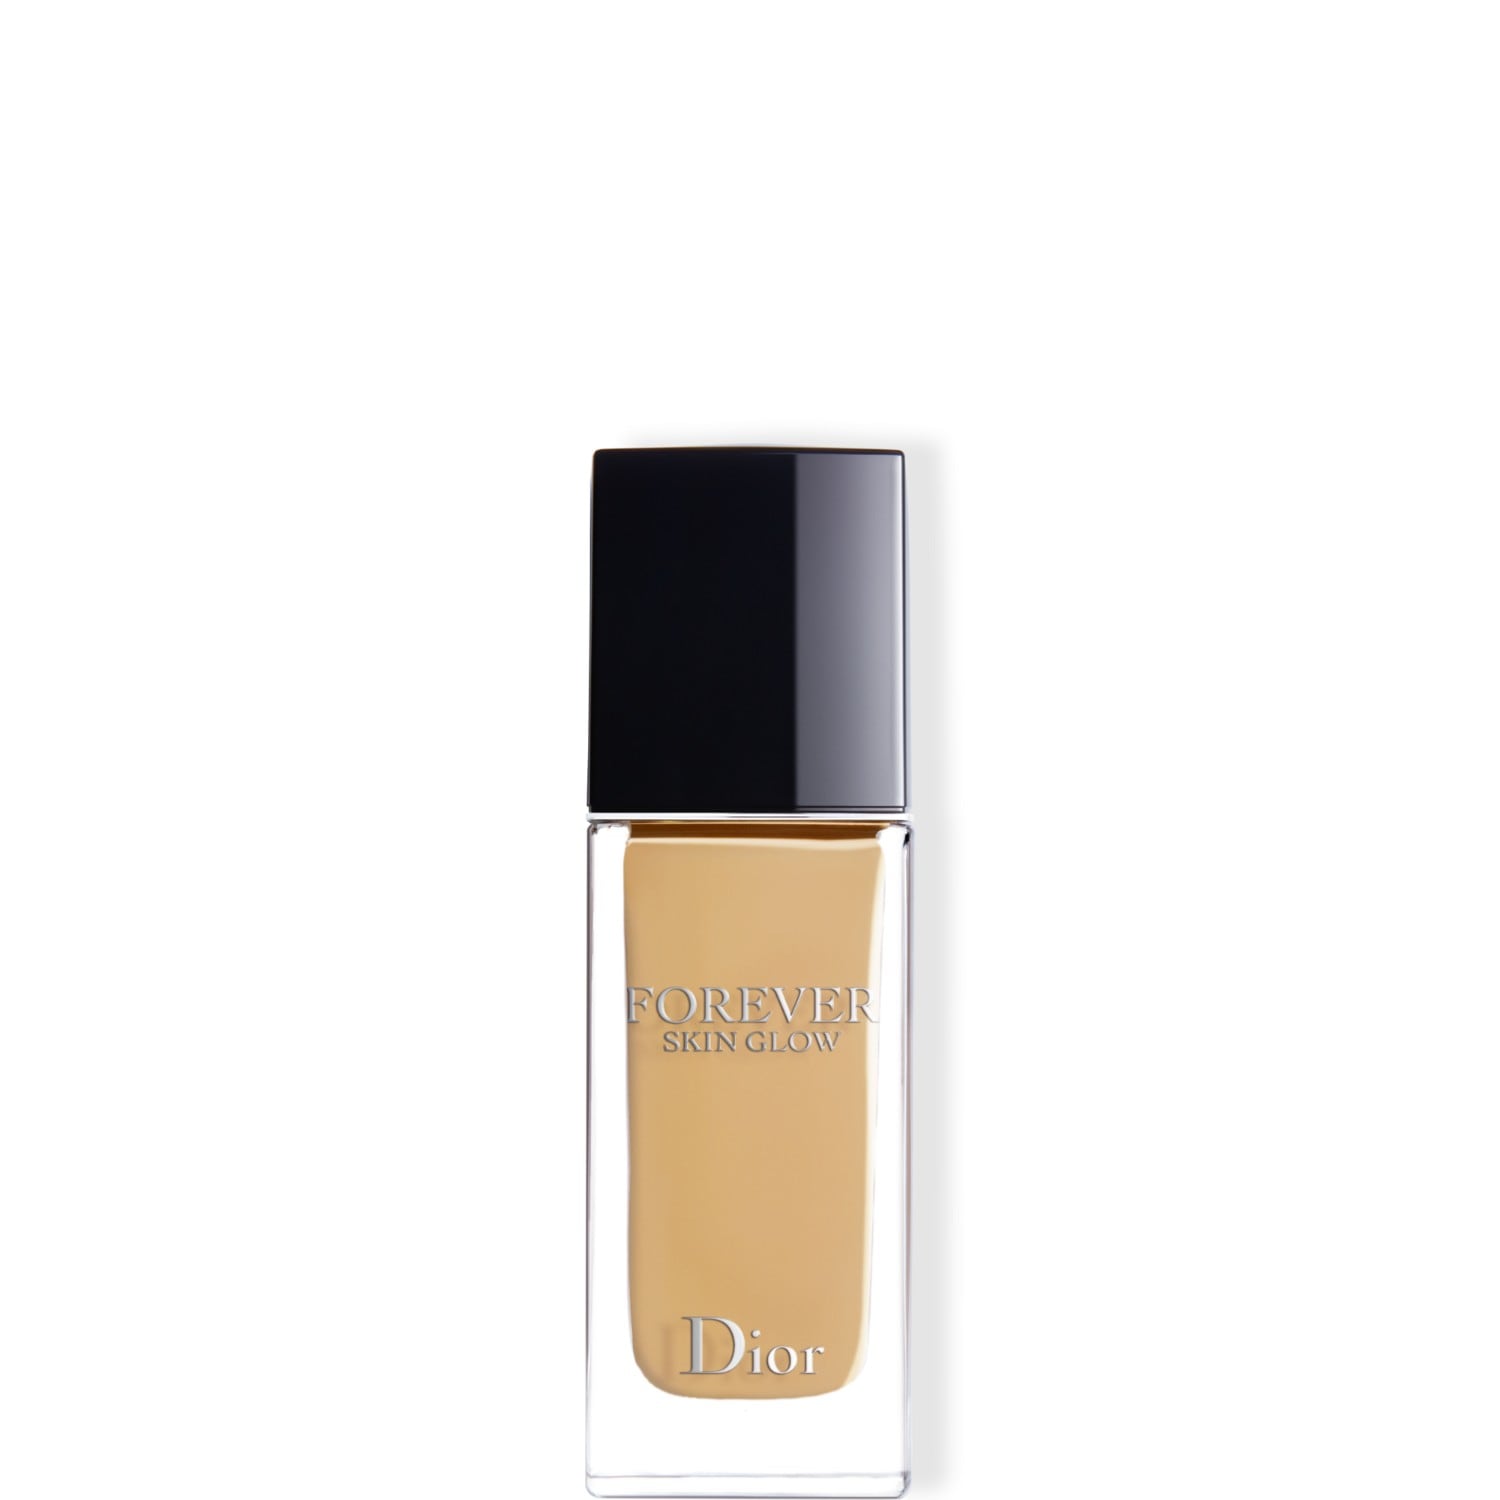 Dior Forever Skin Glow Foundation, No. 3WO - Warm Olive